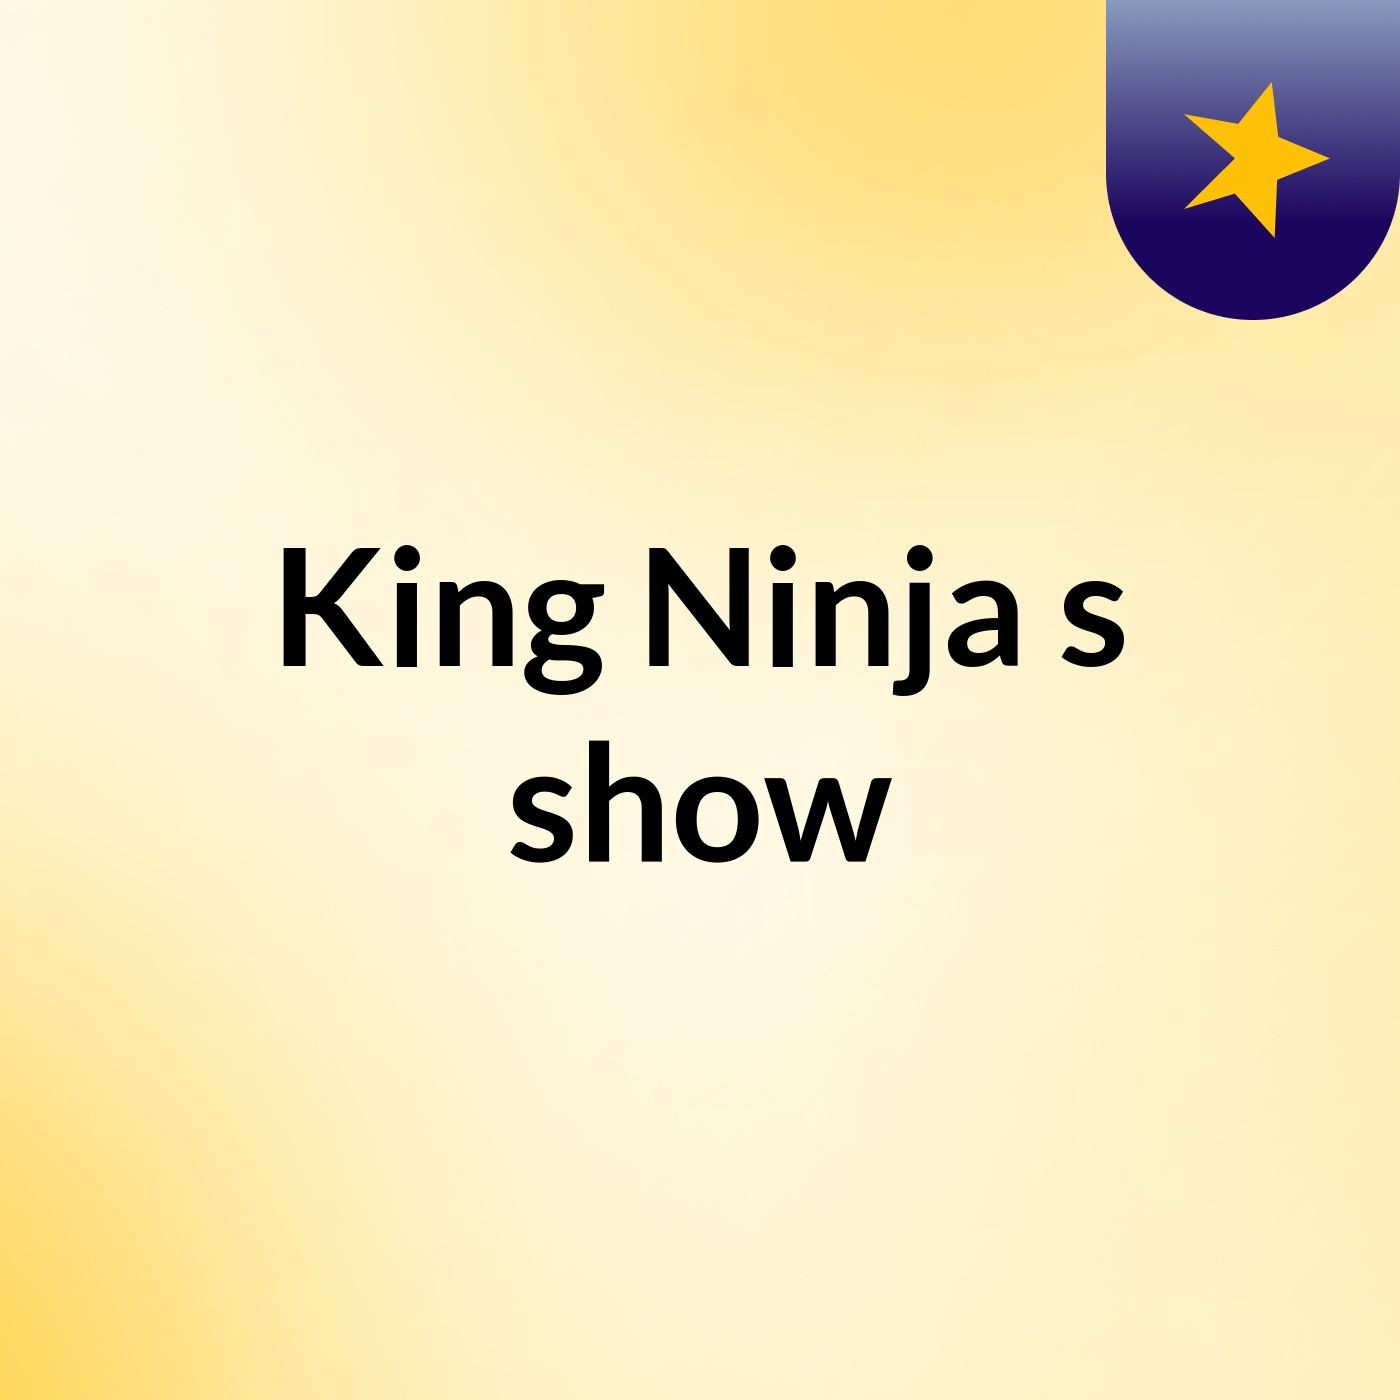 King Ninja's show